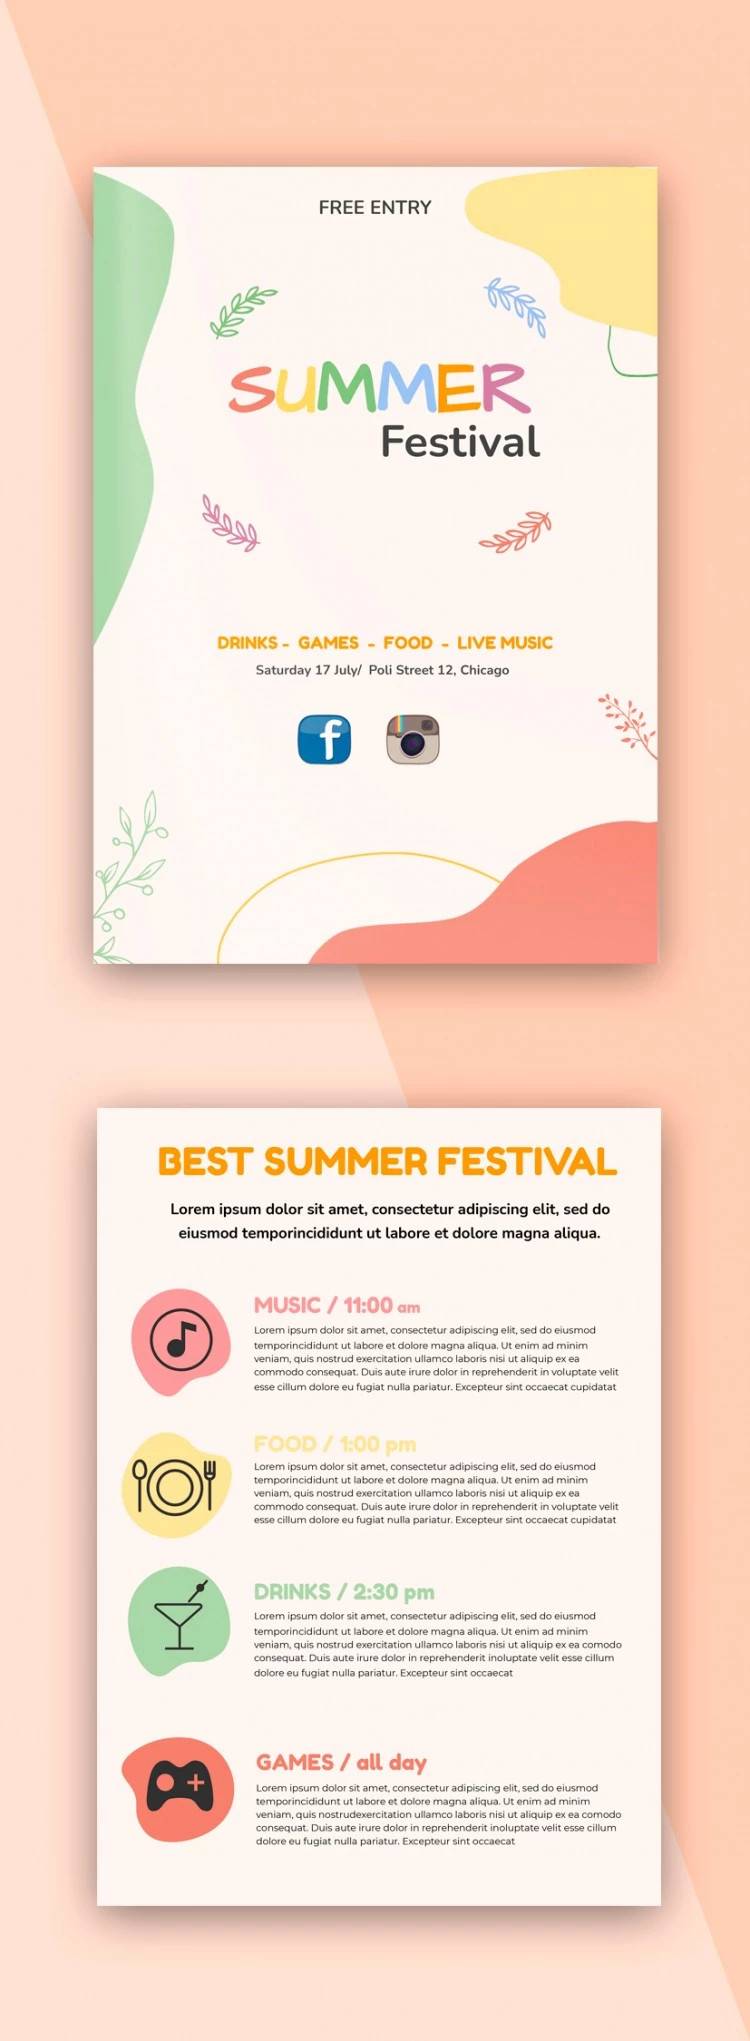 Summer Festival Flyer - free Google Docs Template - 10061682